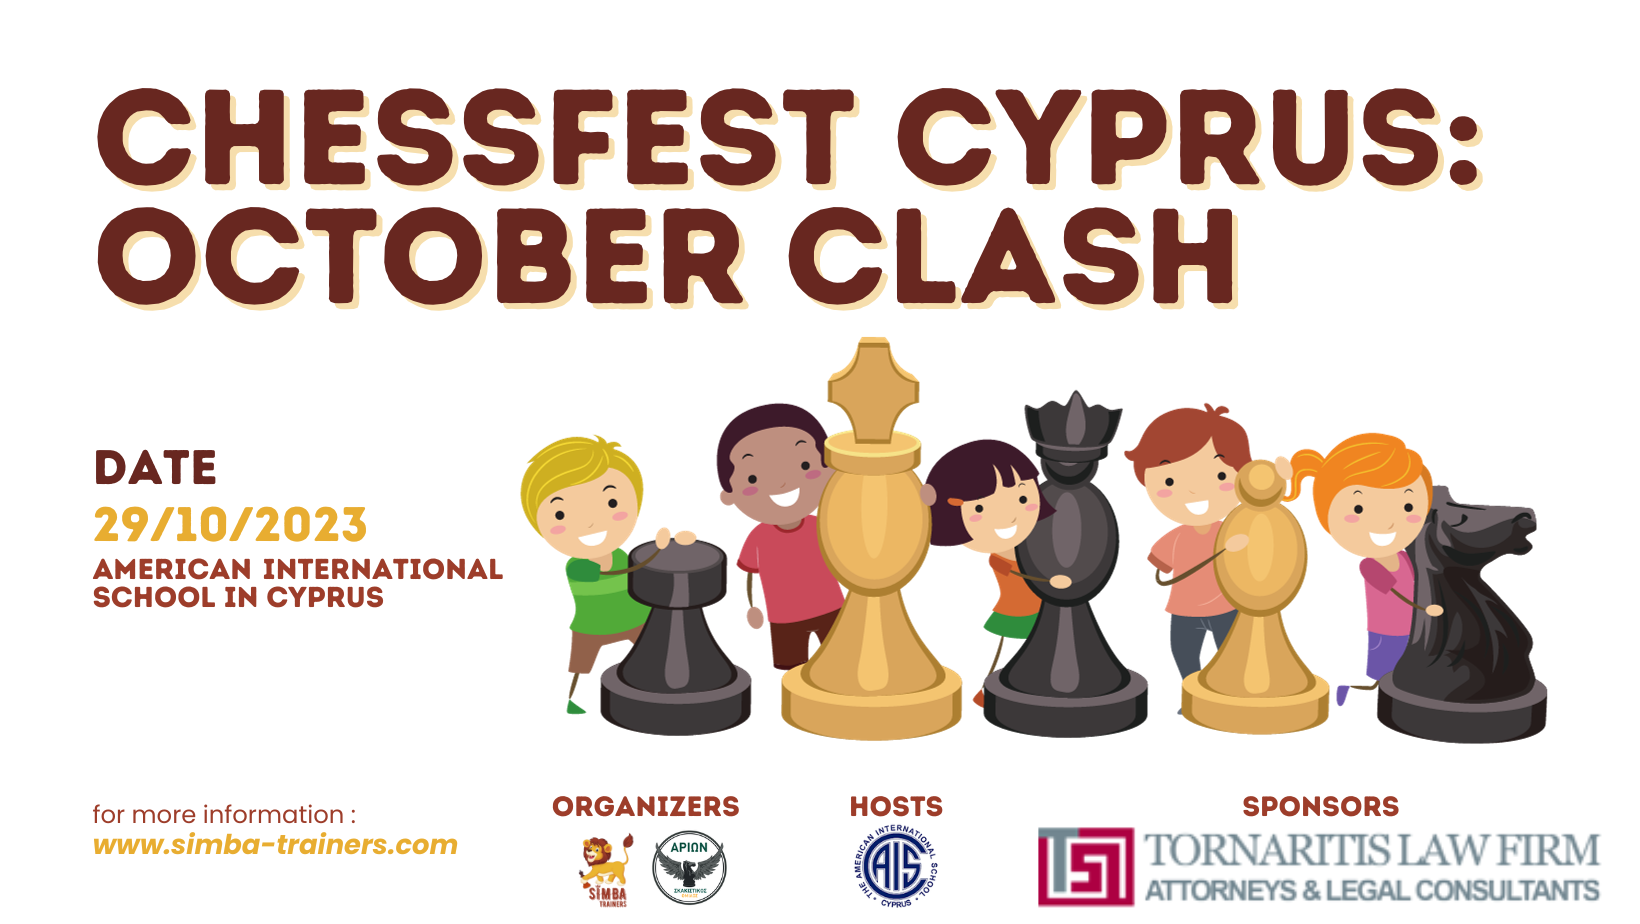 ChessFest Cyprus October Clash